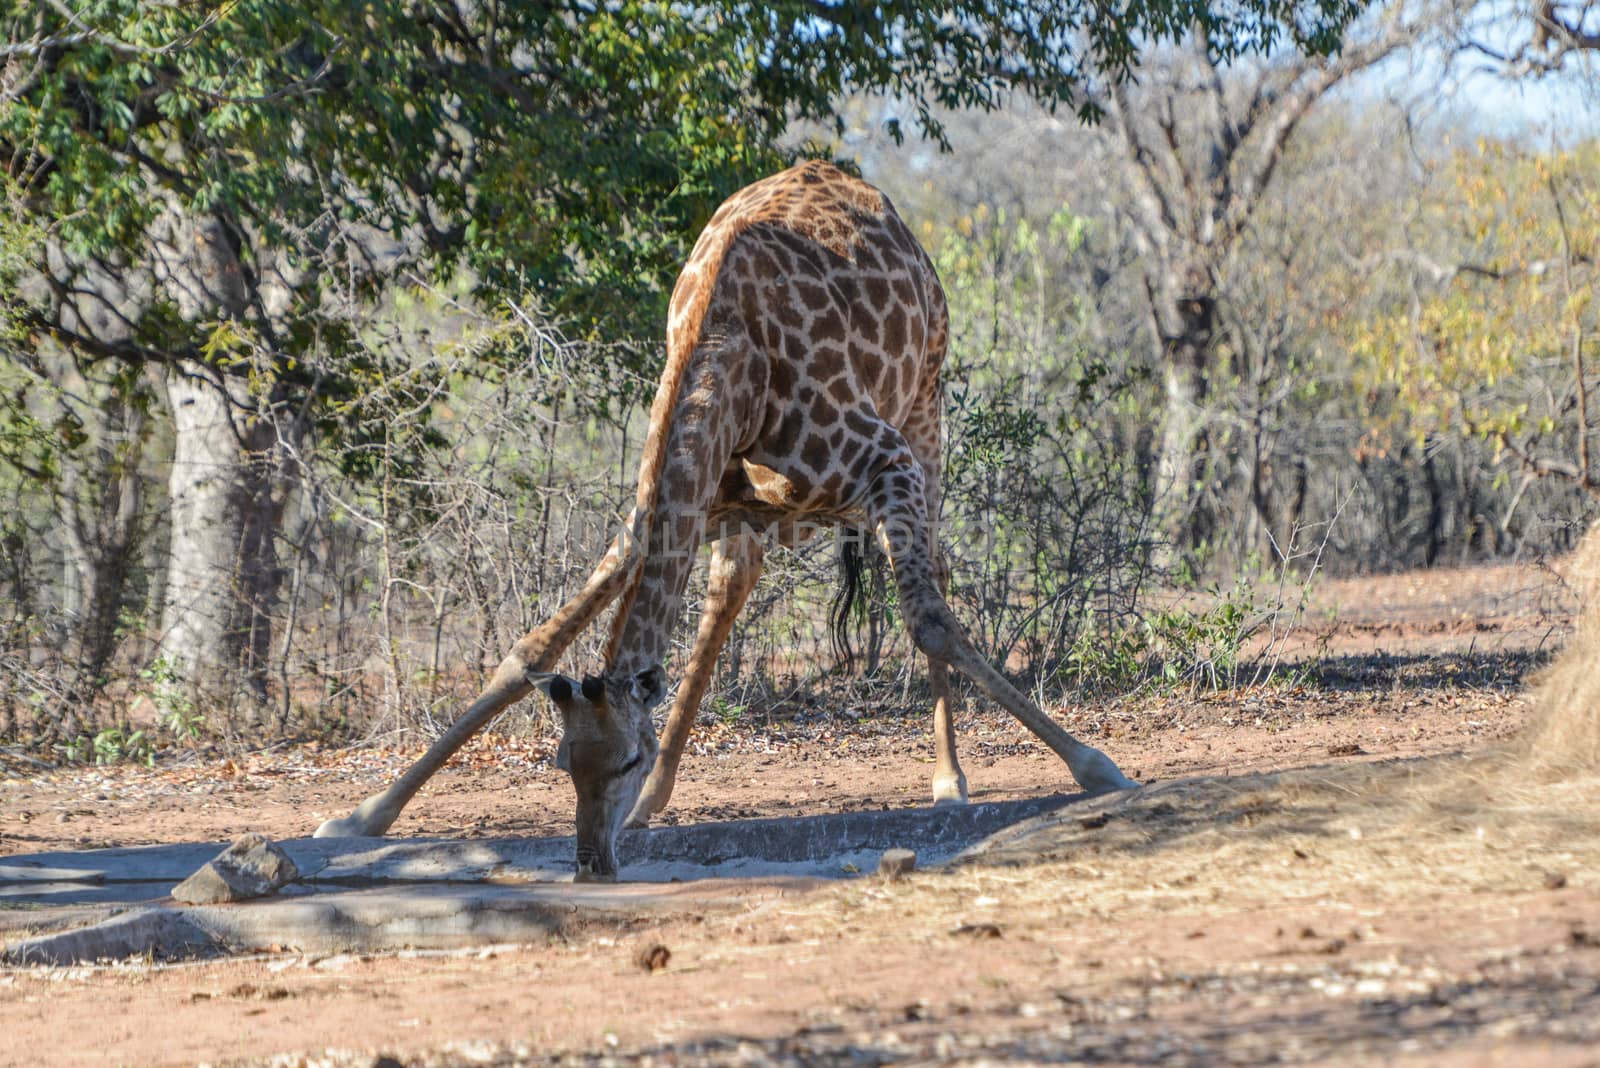 Giraffe drinking at water hole by marcrossmann